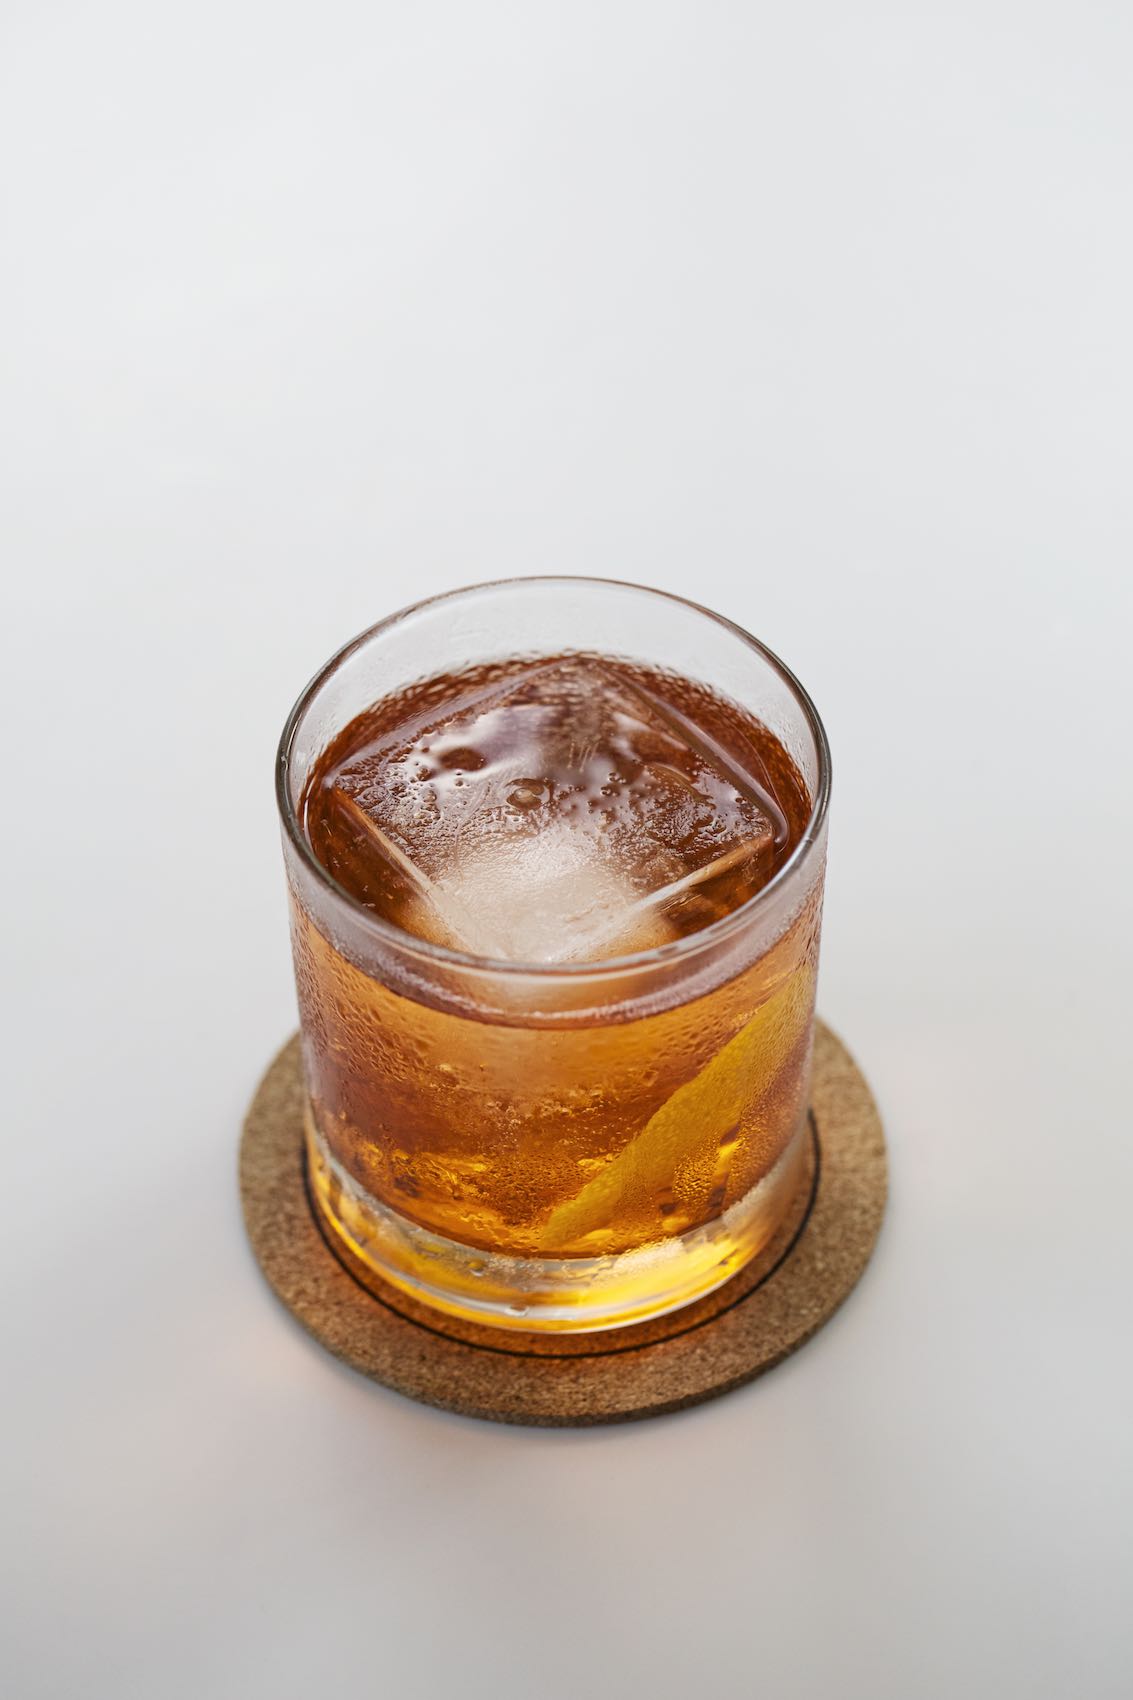 Jody Horton Photography - Whiskey with large cube on cork coaster on white table.